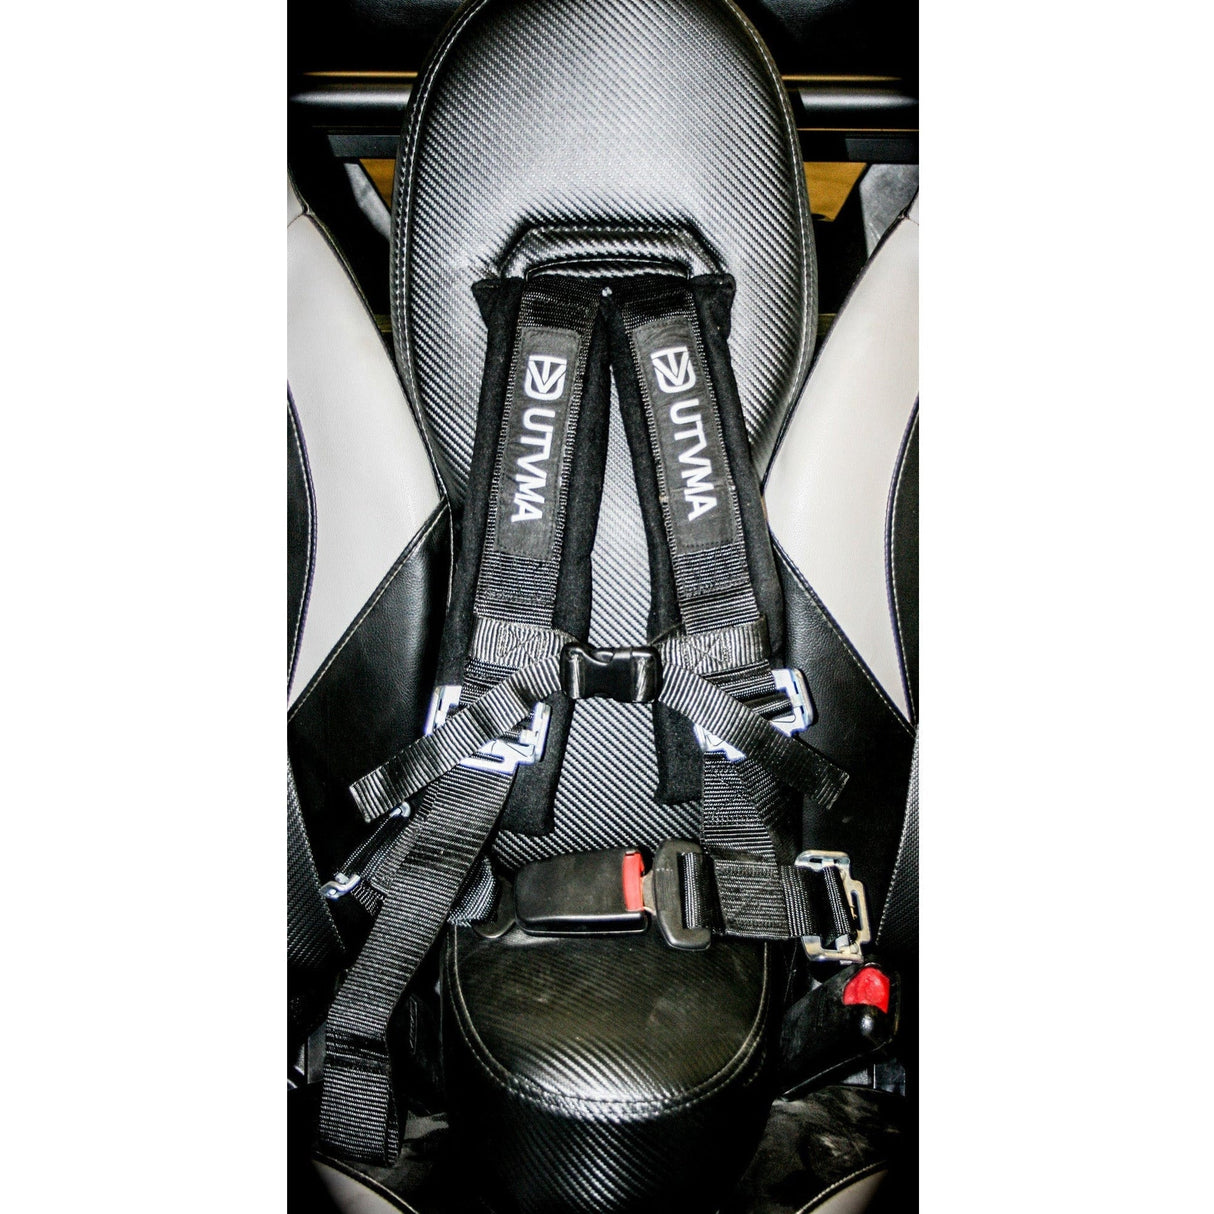 Polaris RZR 570 (2012-2016) Bump Seat with Harness